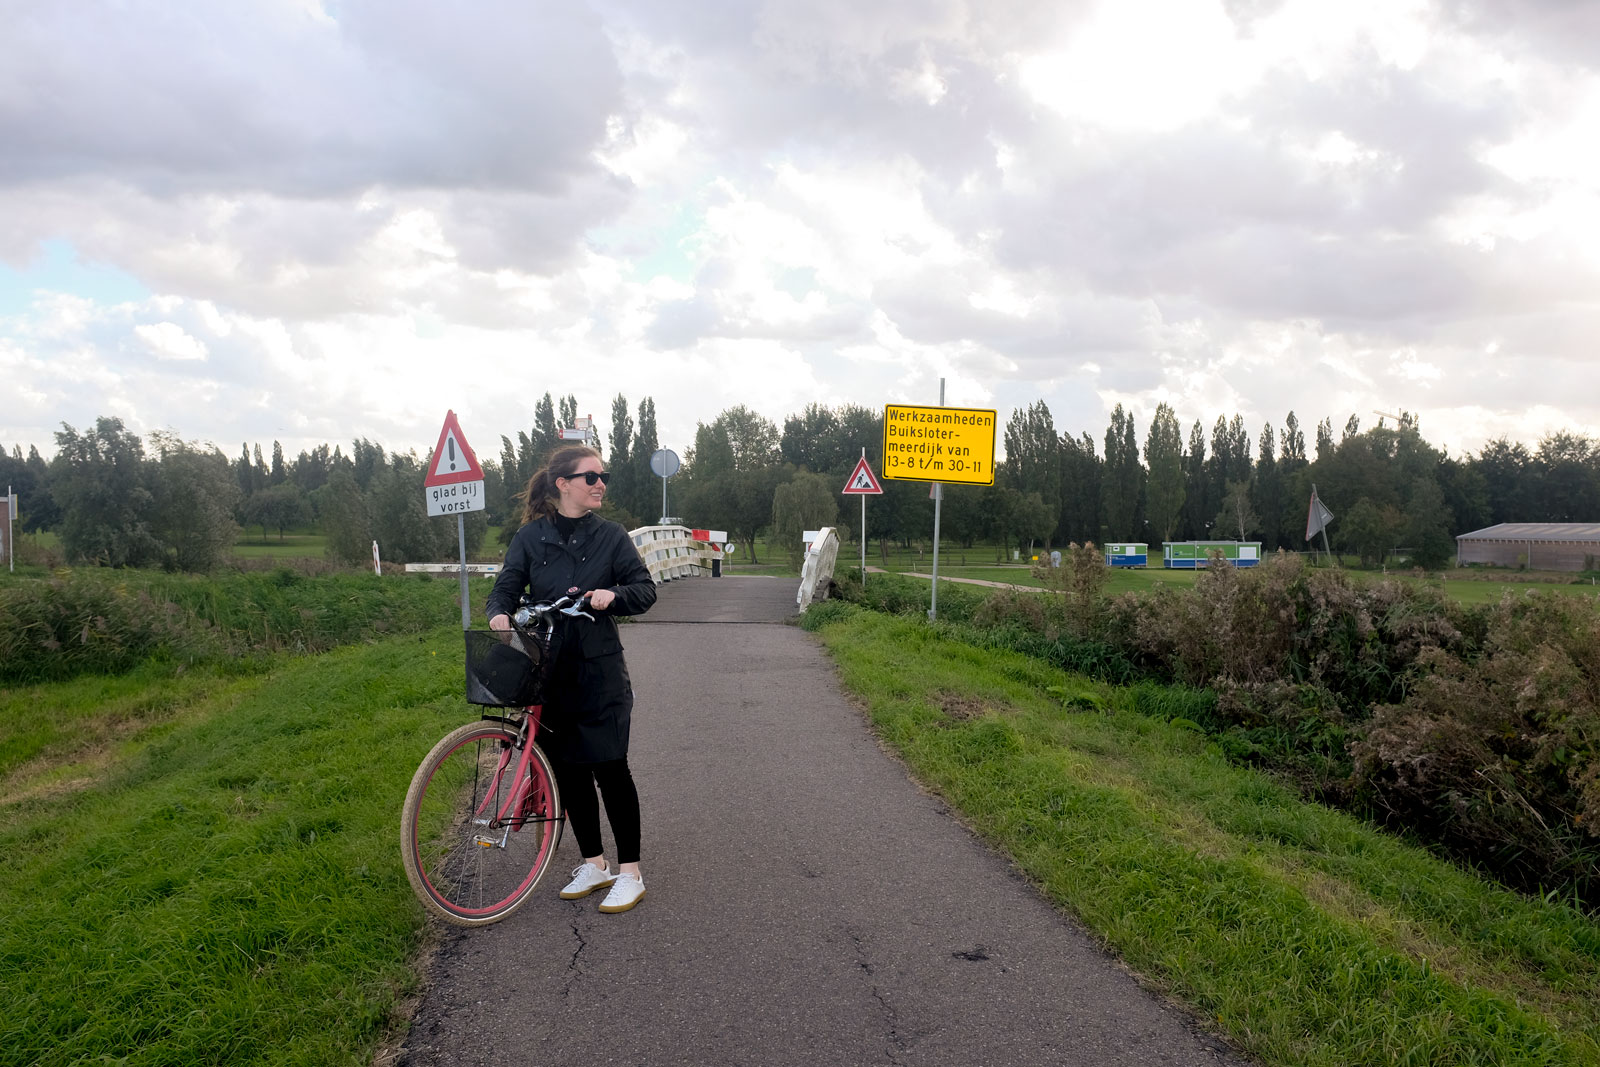 Alyssa with a bike in Amsterdam Noord